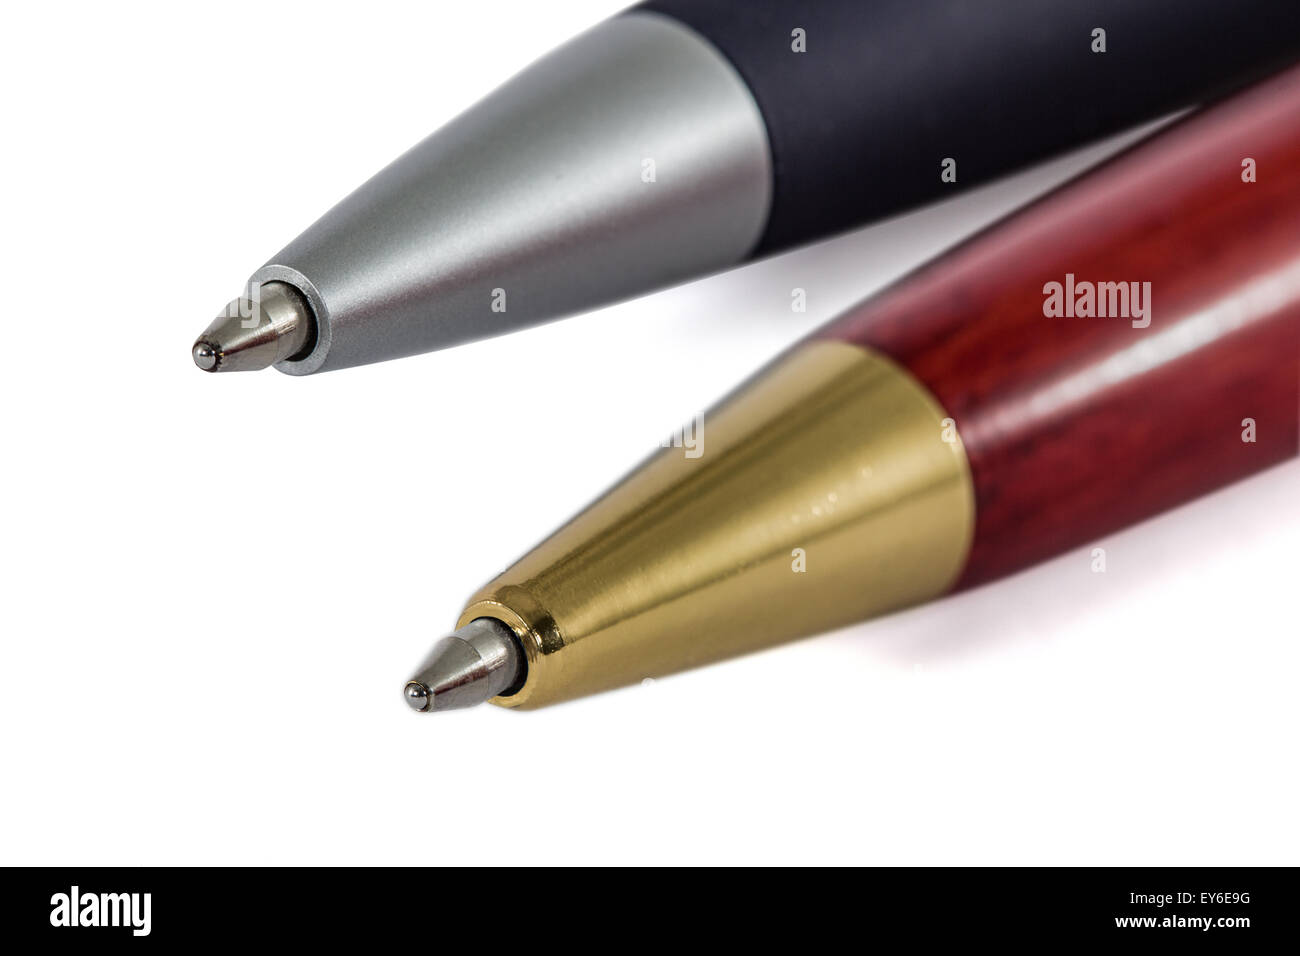 Pens close-up, isolated on white background Stock Photo